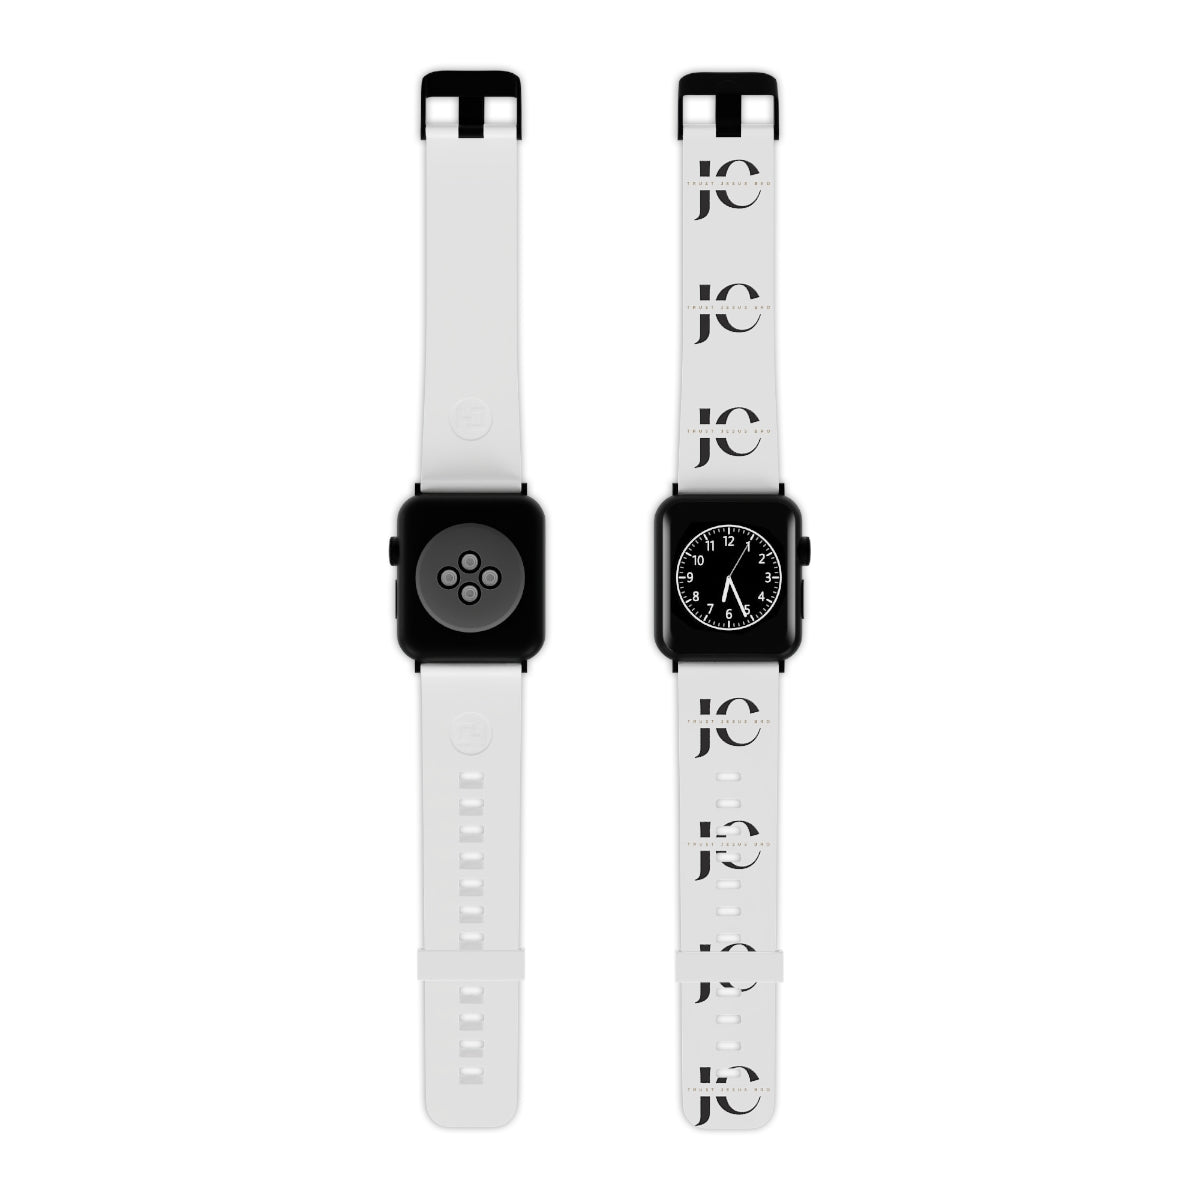 Trust Jesus Bro- Apple Watch Band